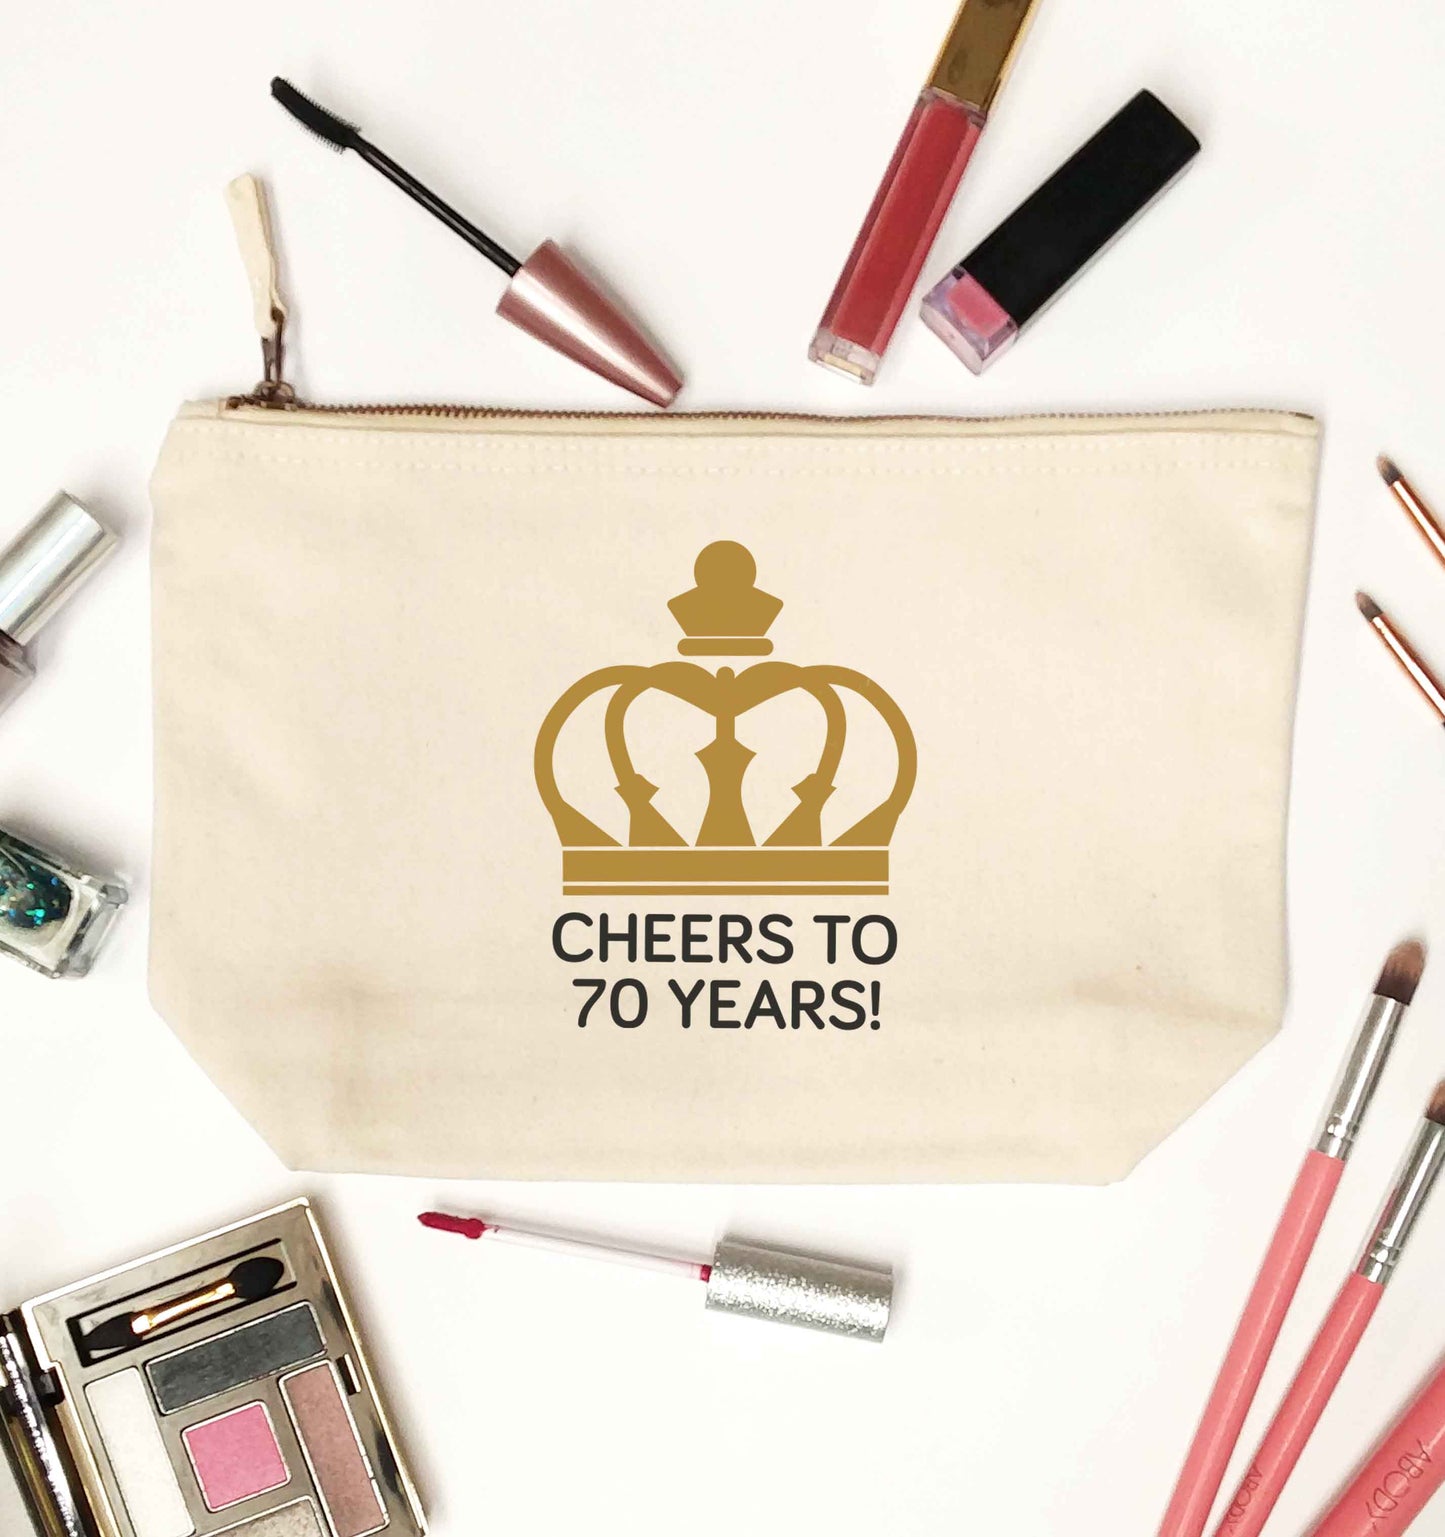 Cheers to 70 years! natural makeup bag